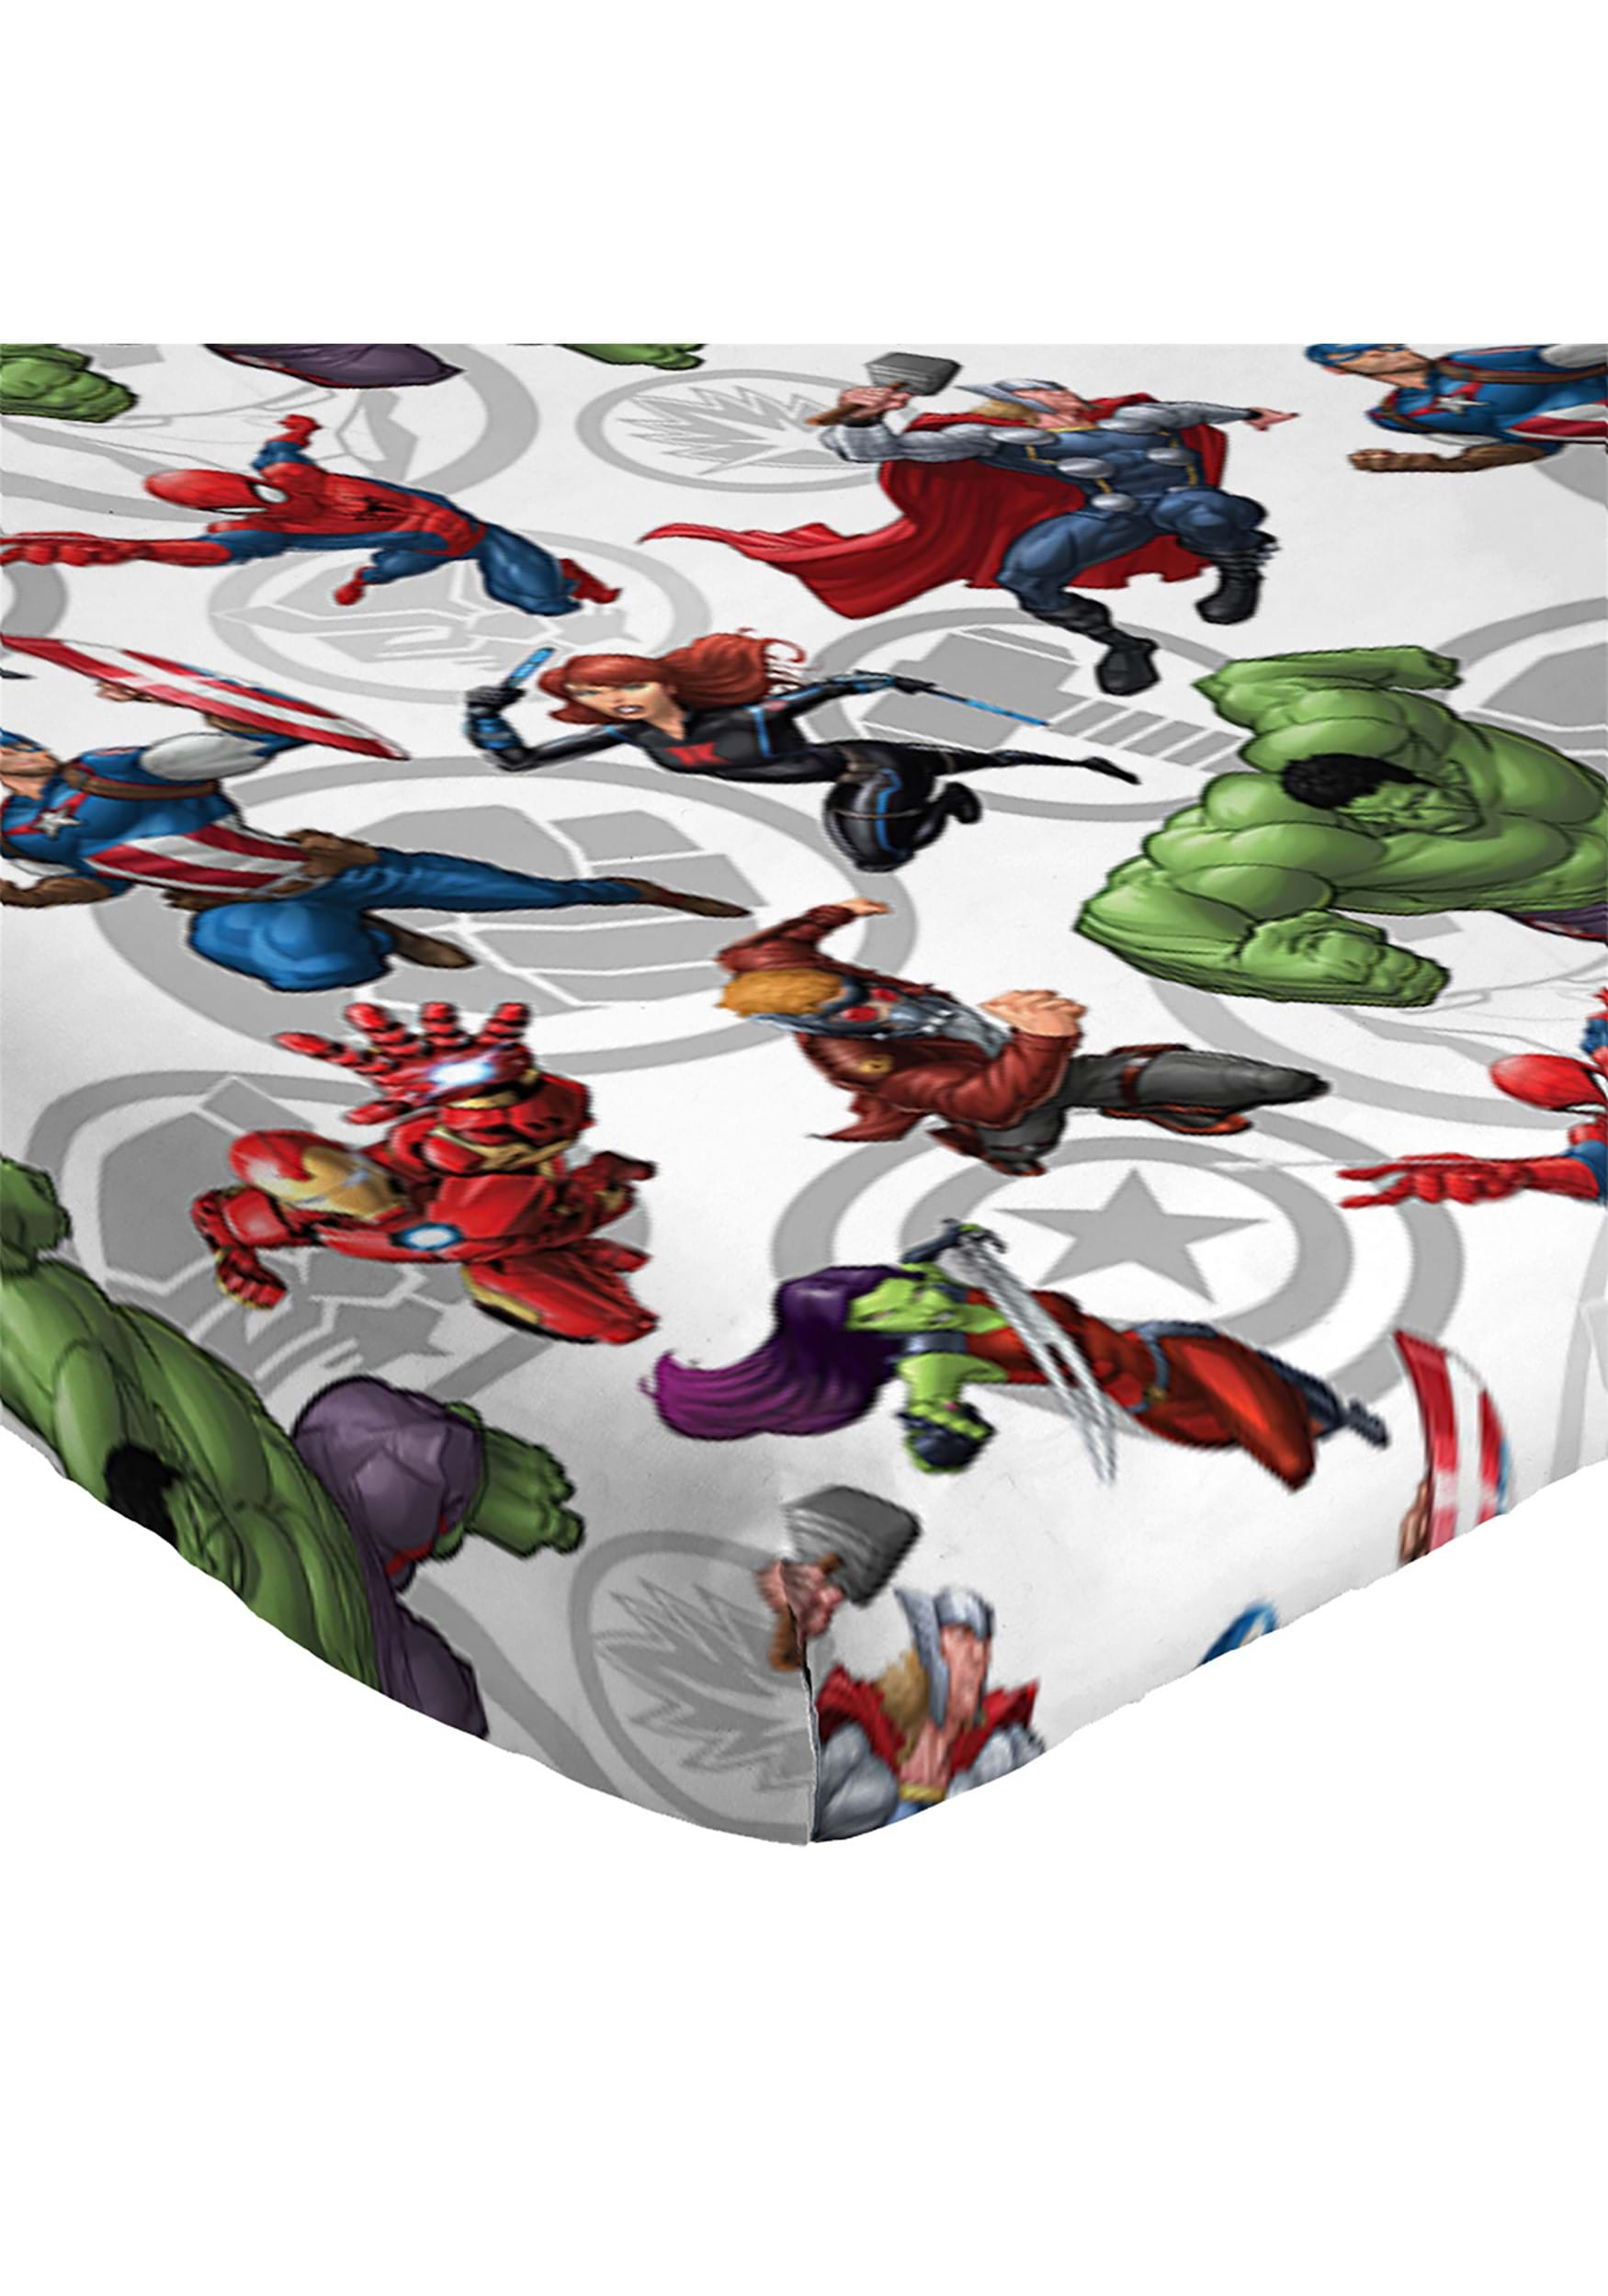 Marvel's Avengers Original Six Superhero Members Bedding Set